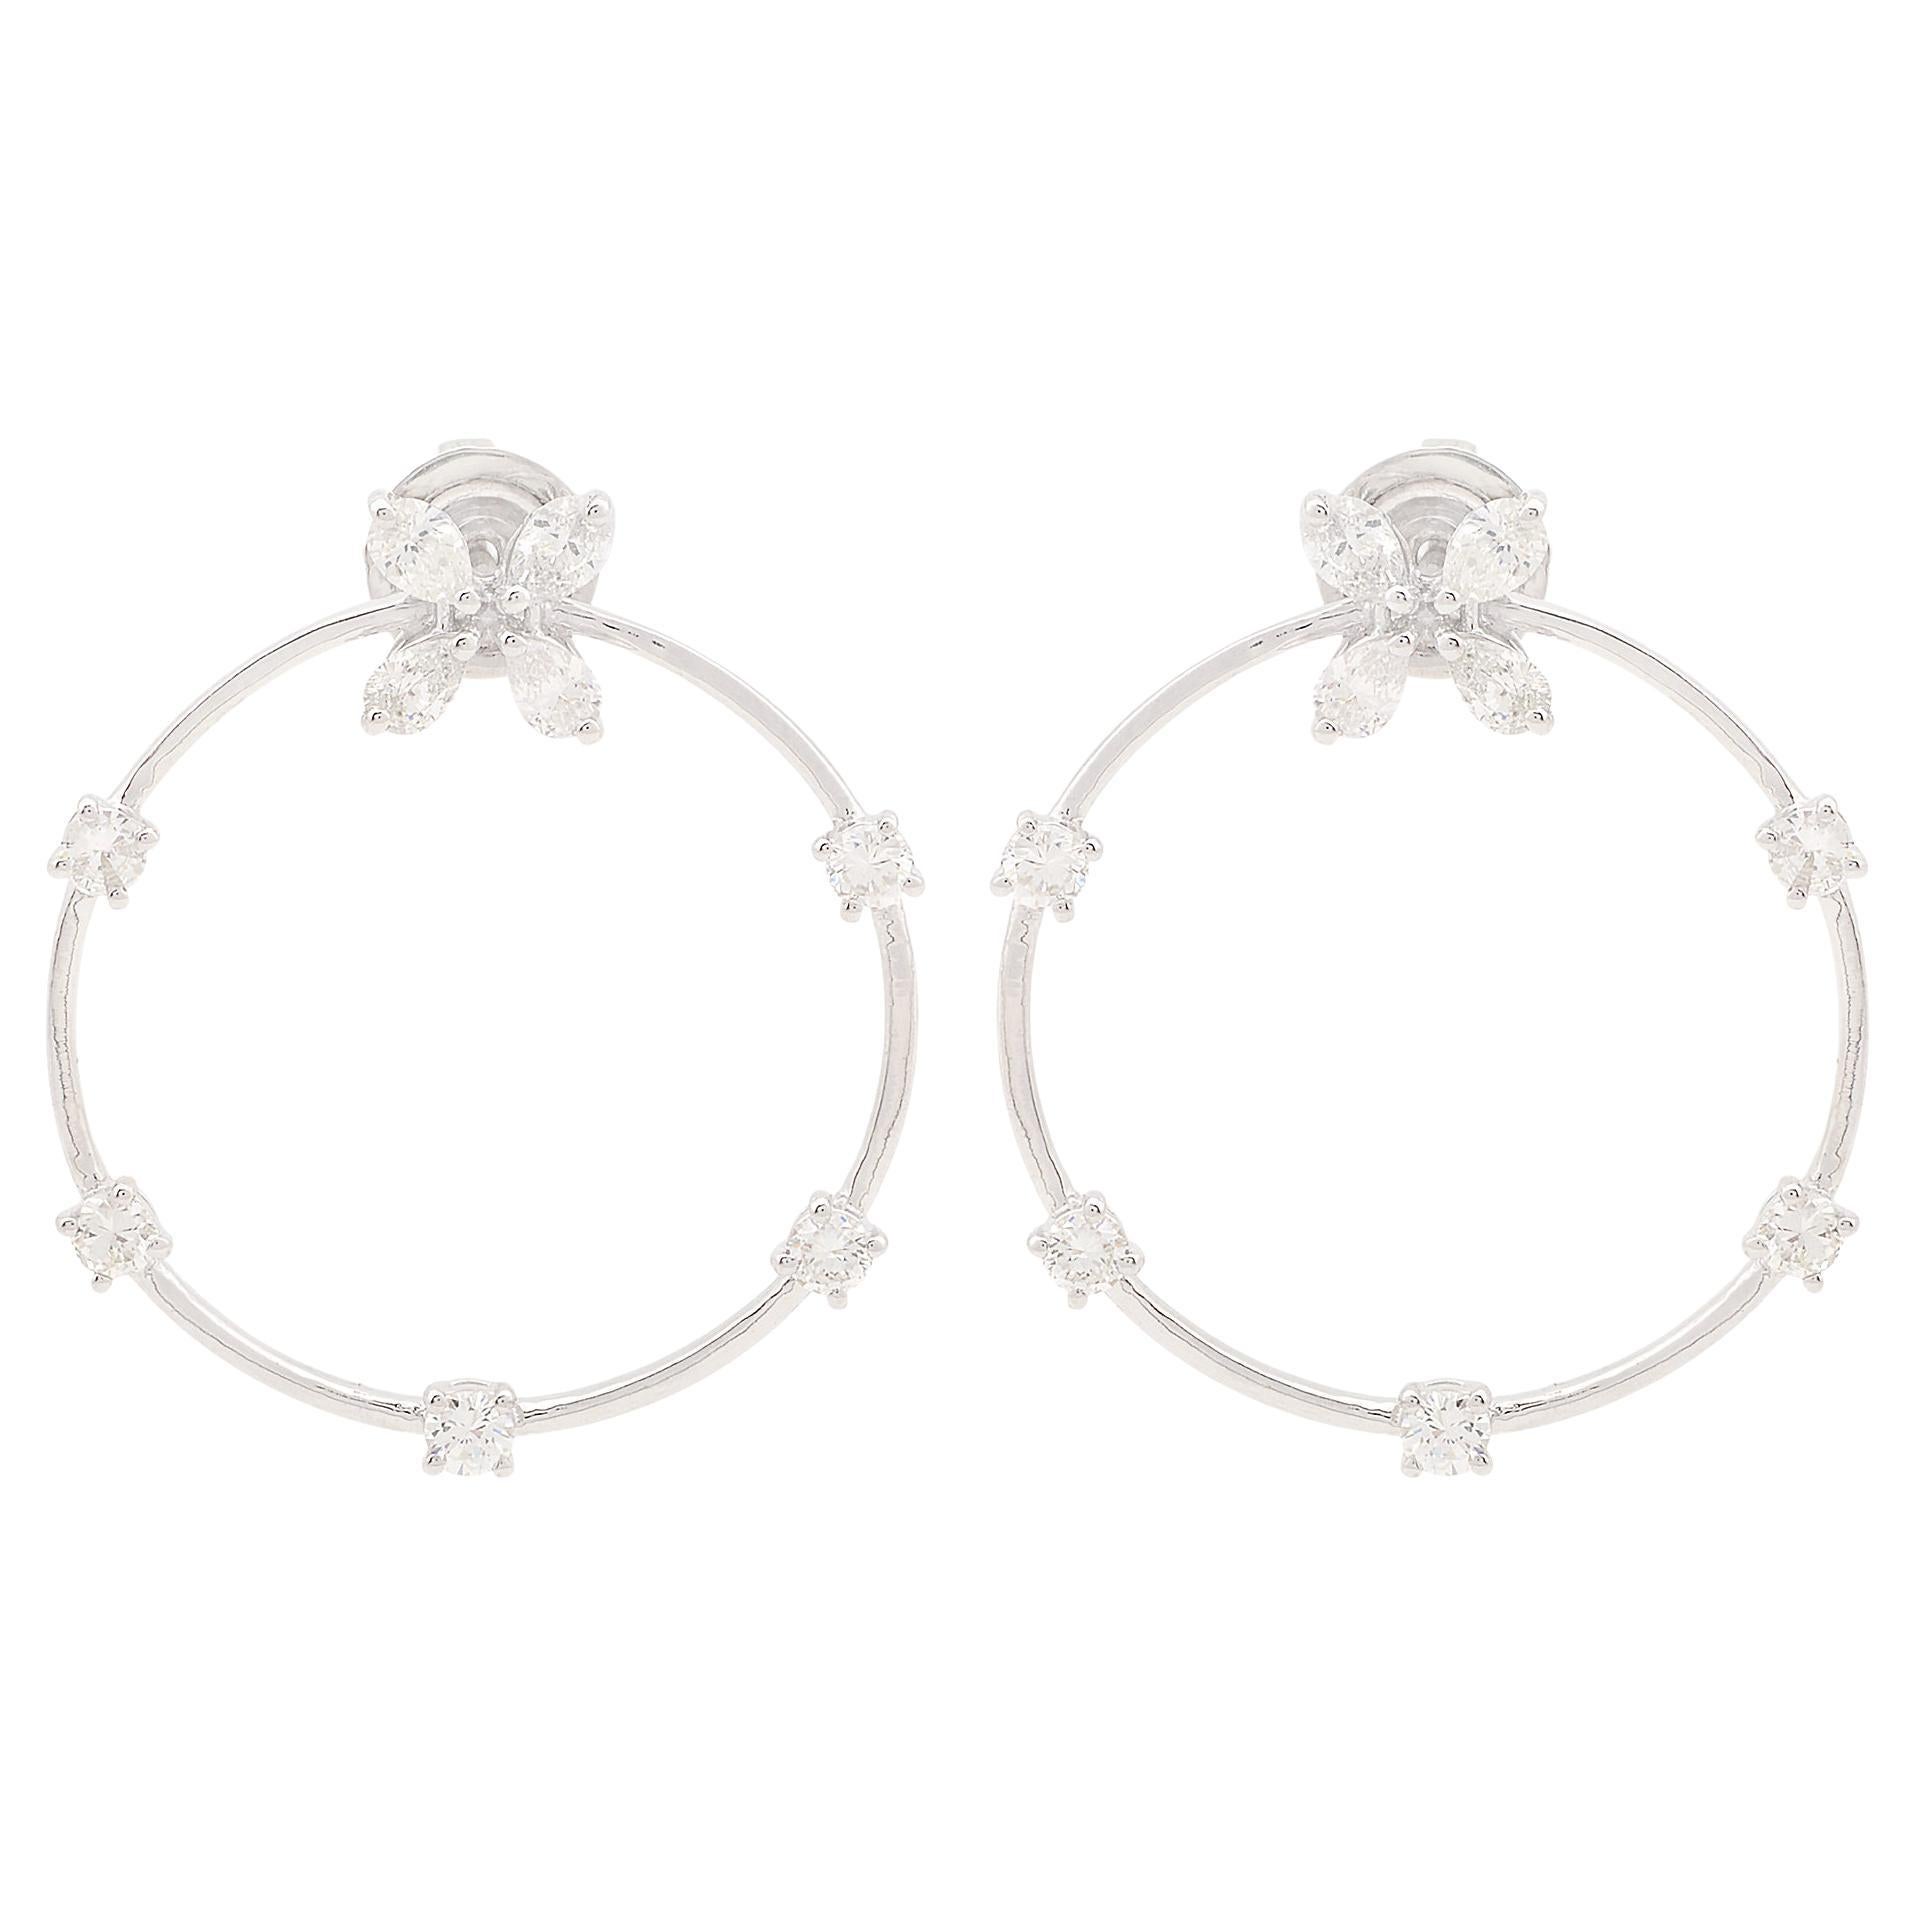 1.55 Carat Pear Diamond Circle Stud Earrings Solid 18k White Gold Fine Jewelry